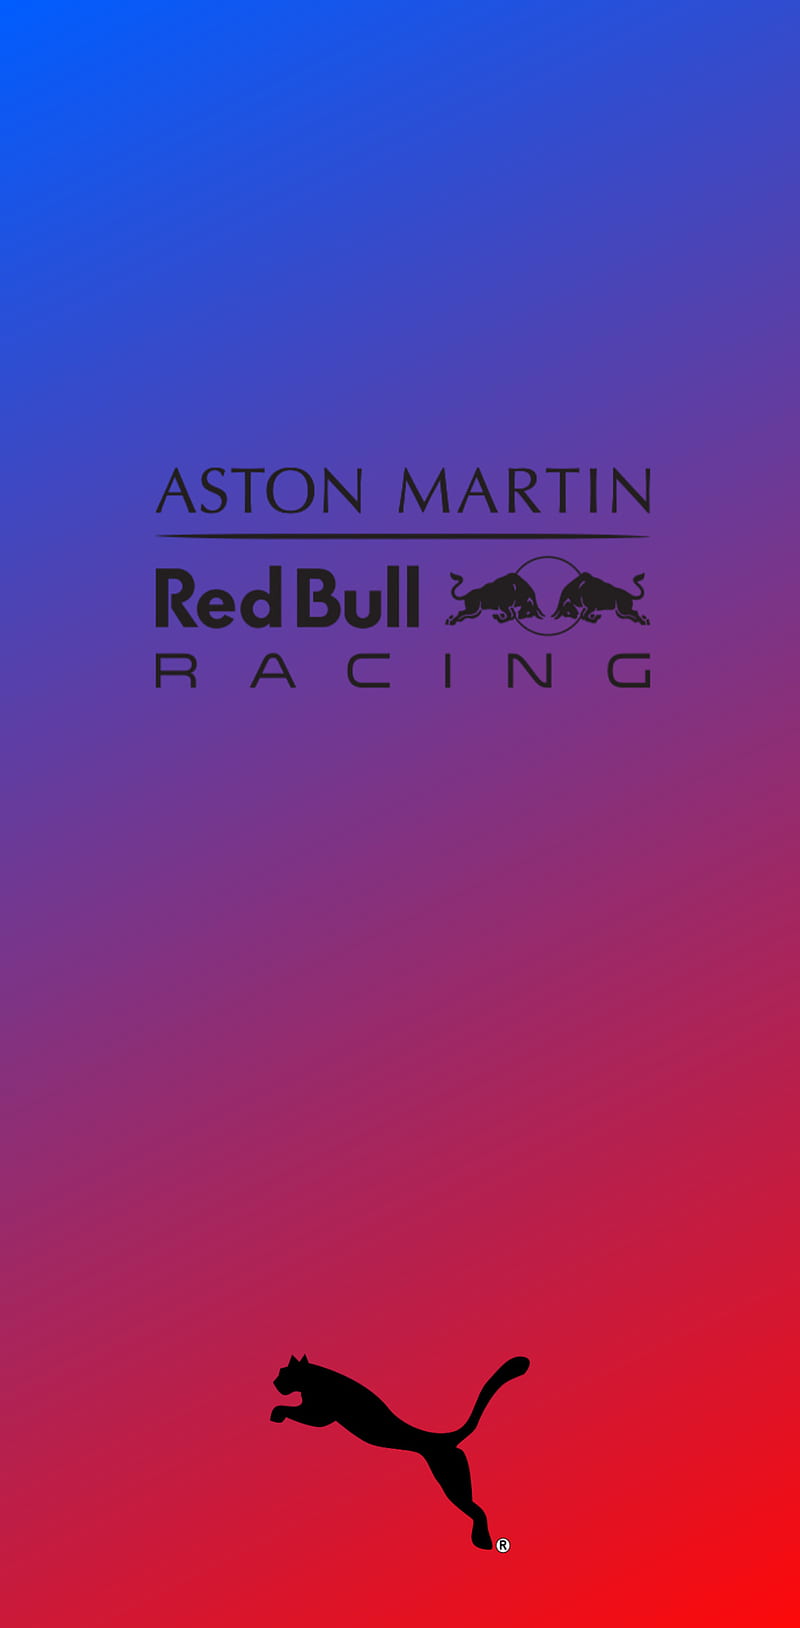 Red Bull Aston Martin F1 Gp Puma Red Bull Racing Hd Phone Wallpaper Peakpx